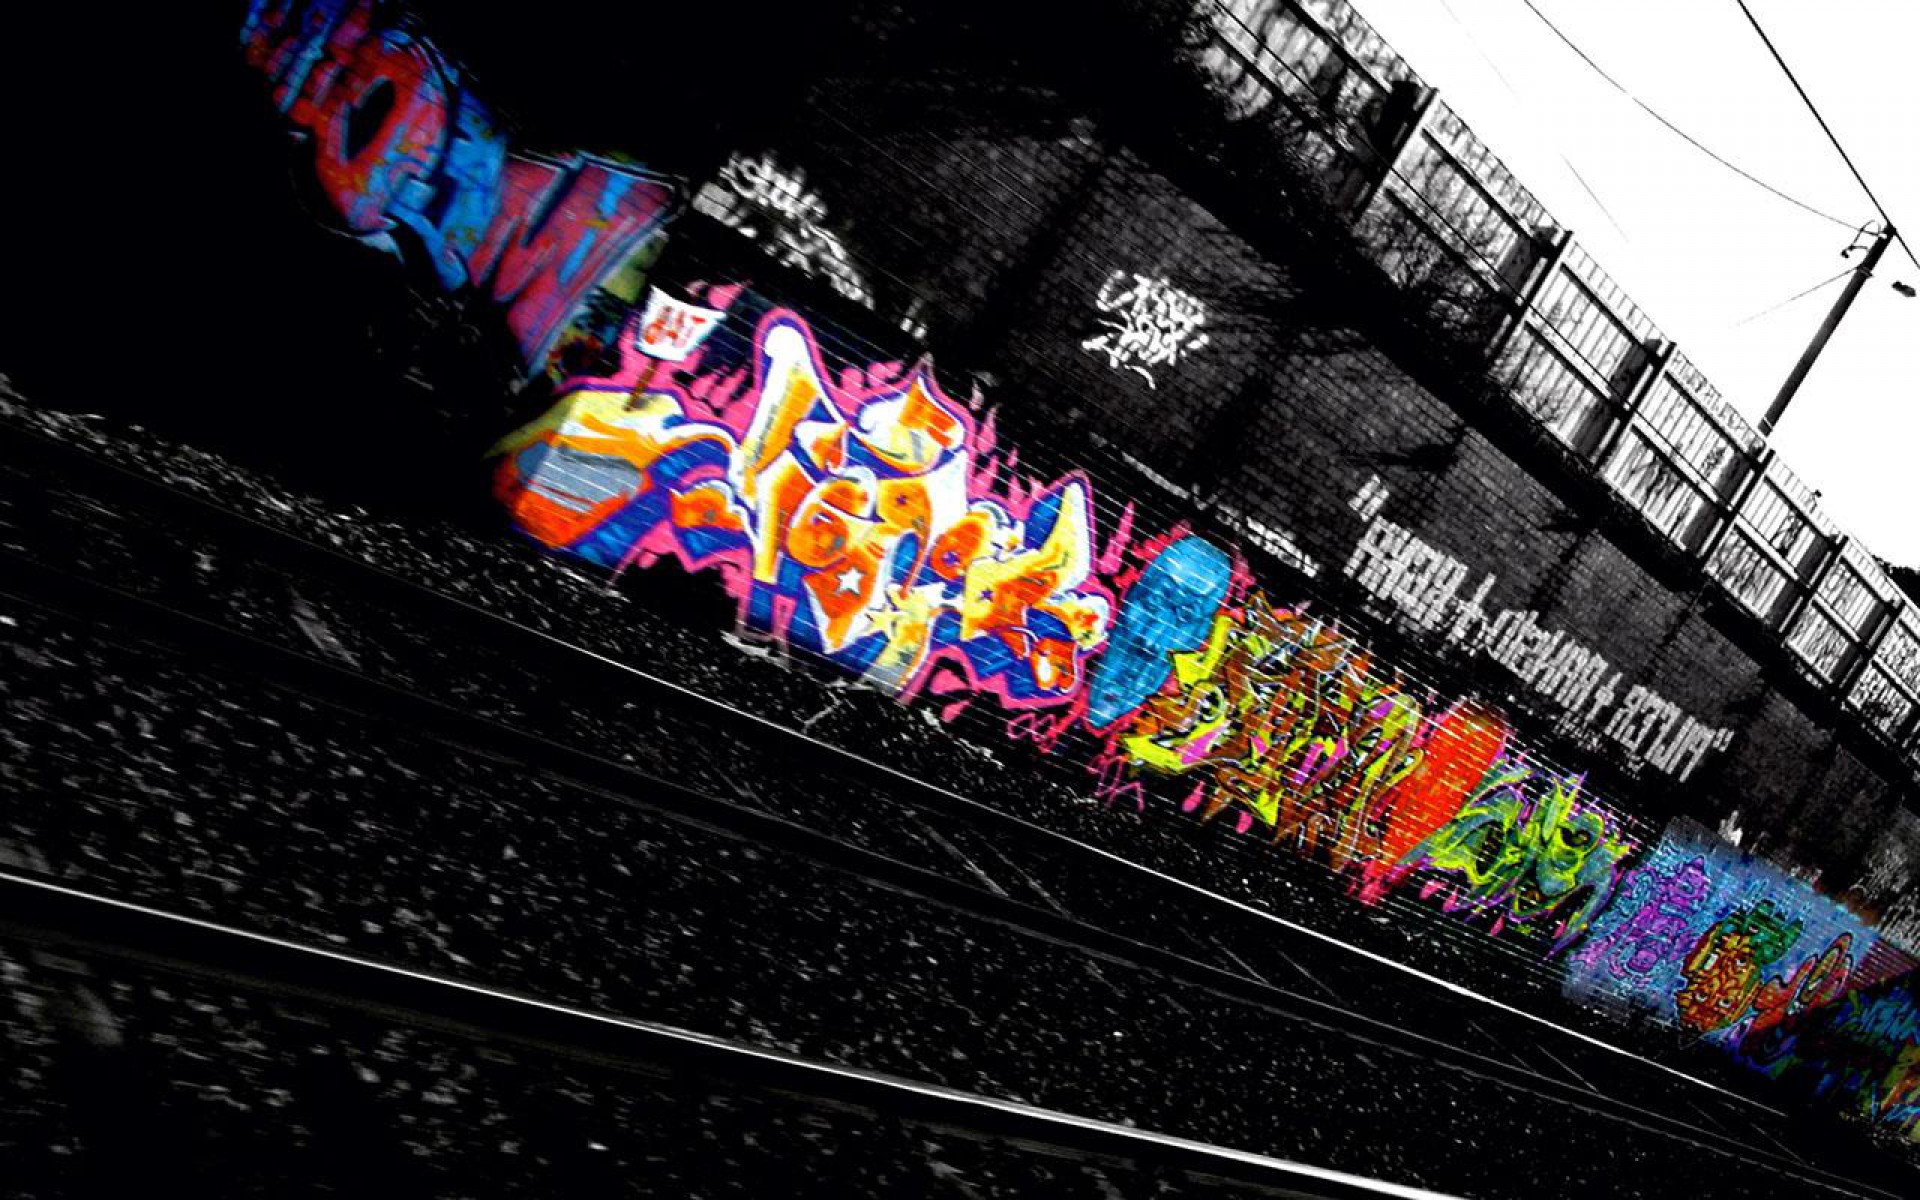 fondos de pantalla de graffiti hd 1080p,pintada,arte callejero,arte,fuente,arquitectura